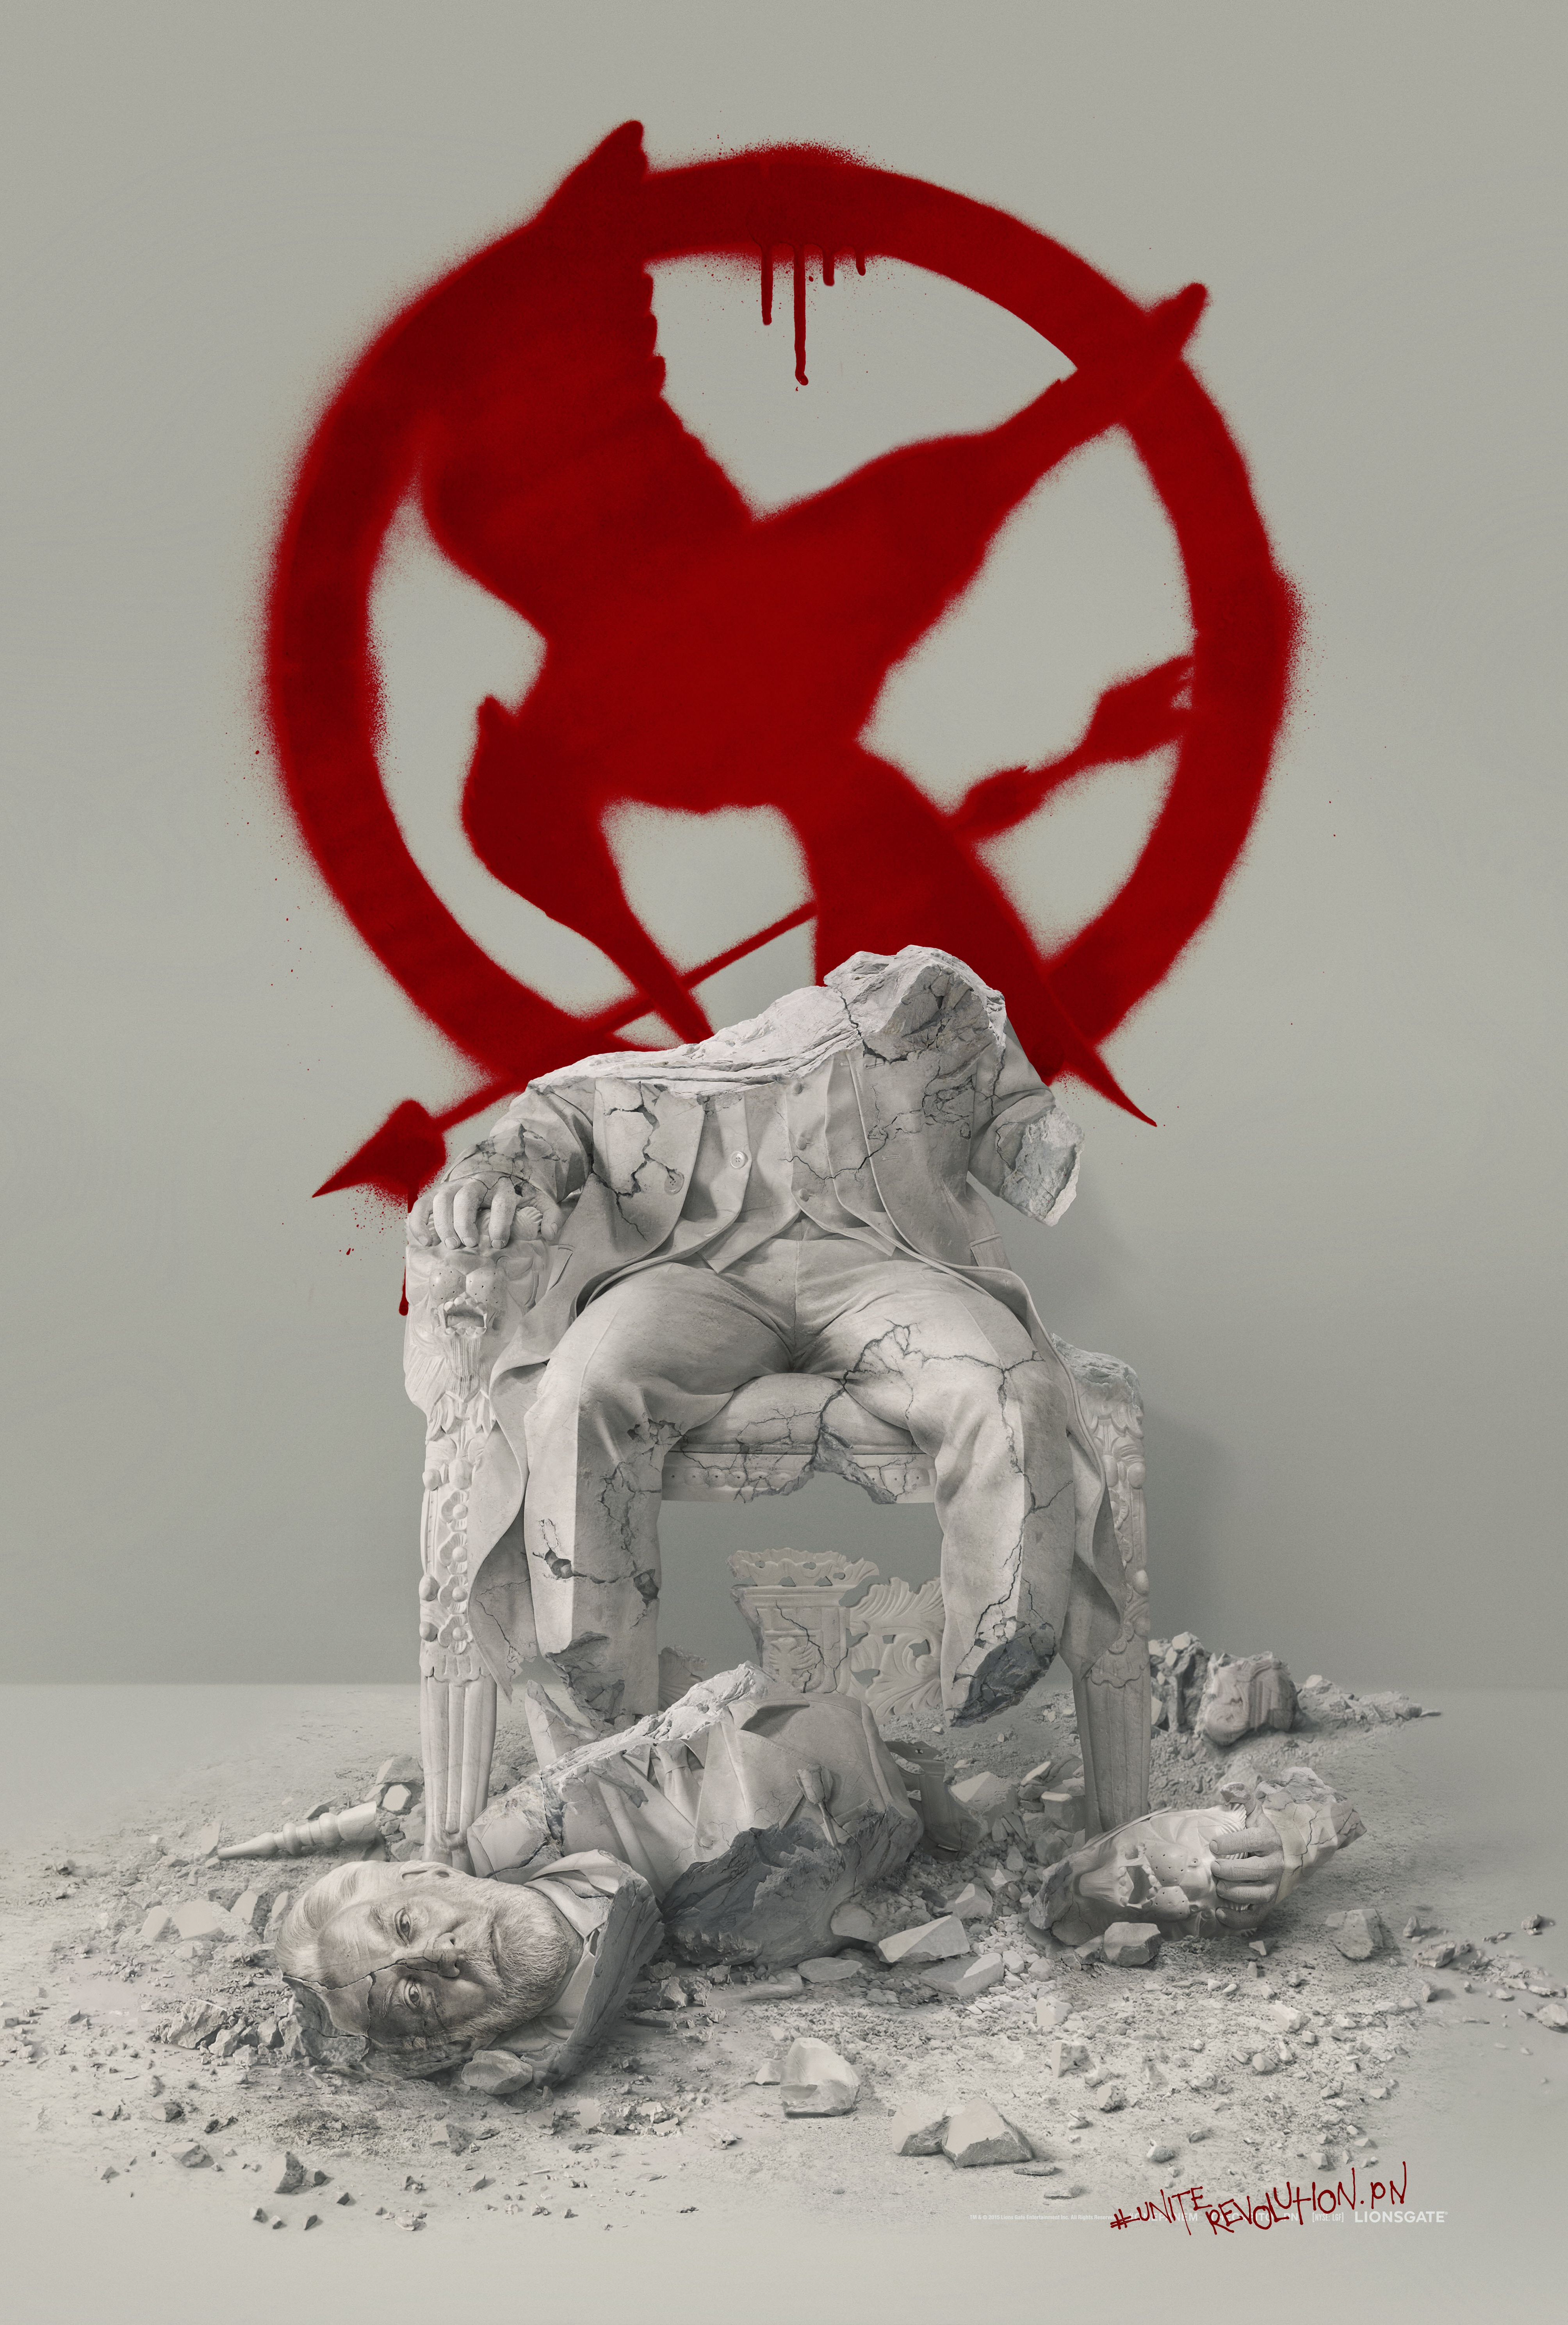 New Teaser Poster for &#039;The Hunger Games: Mockingjay (Part 2)&#039;